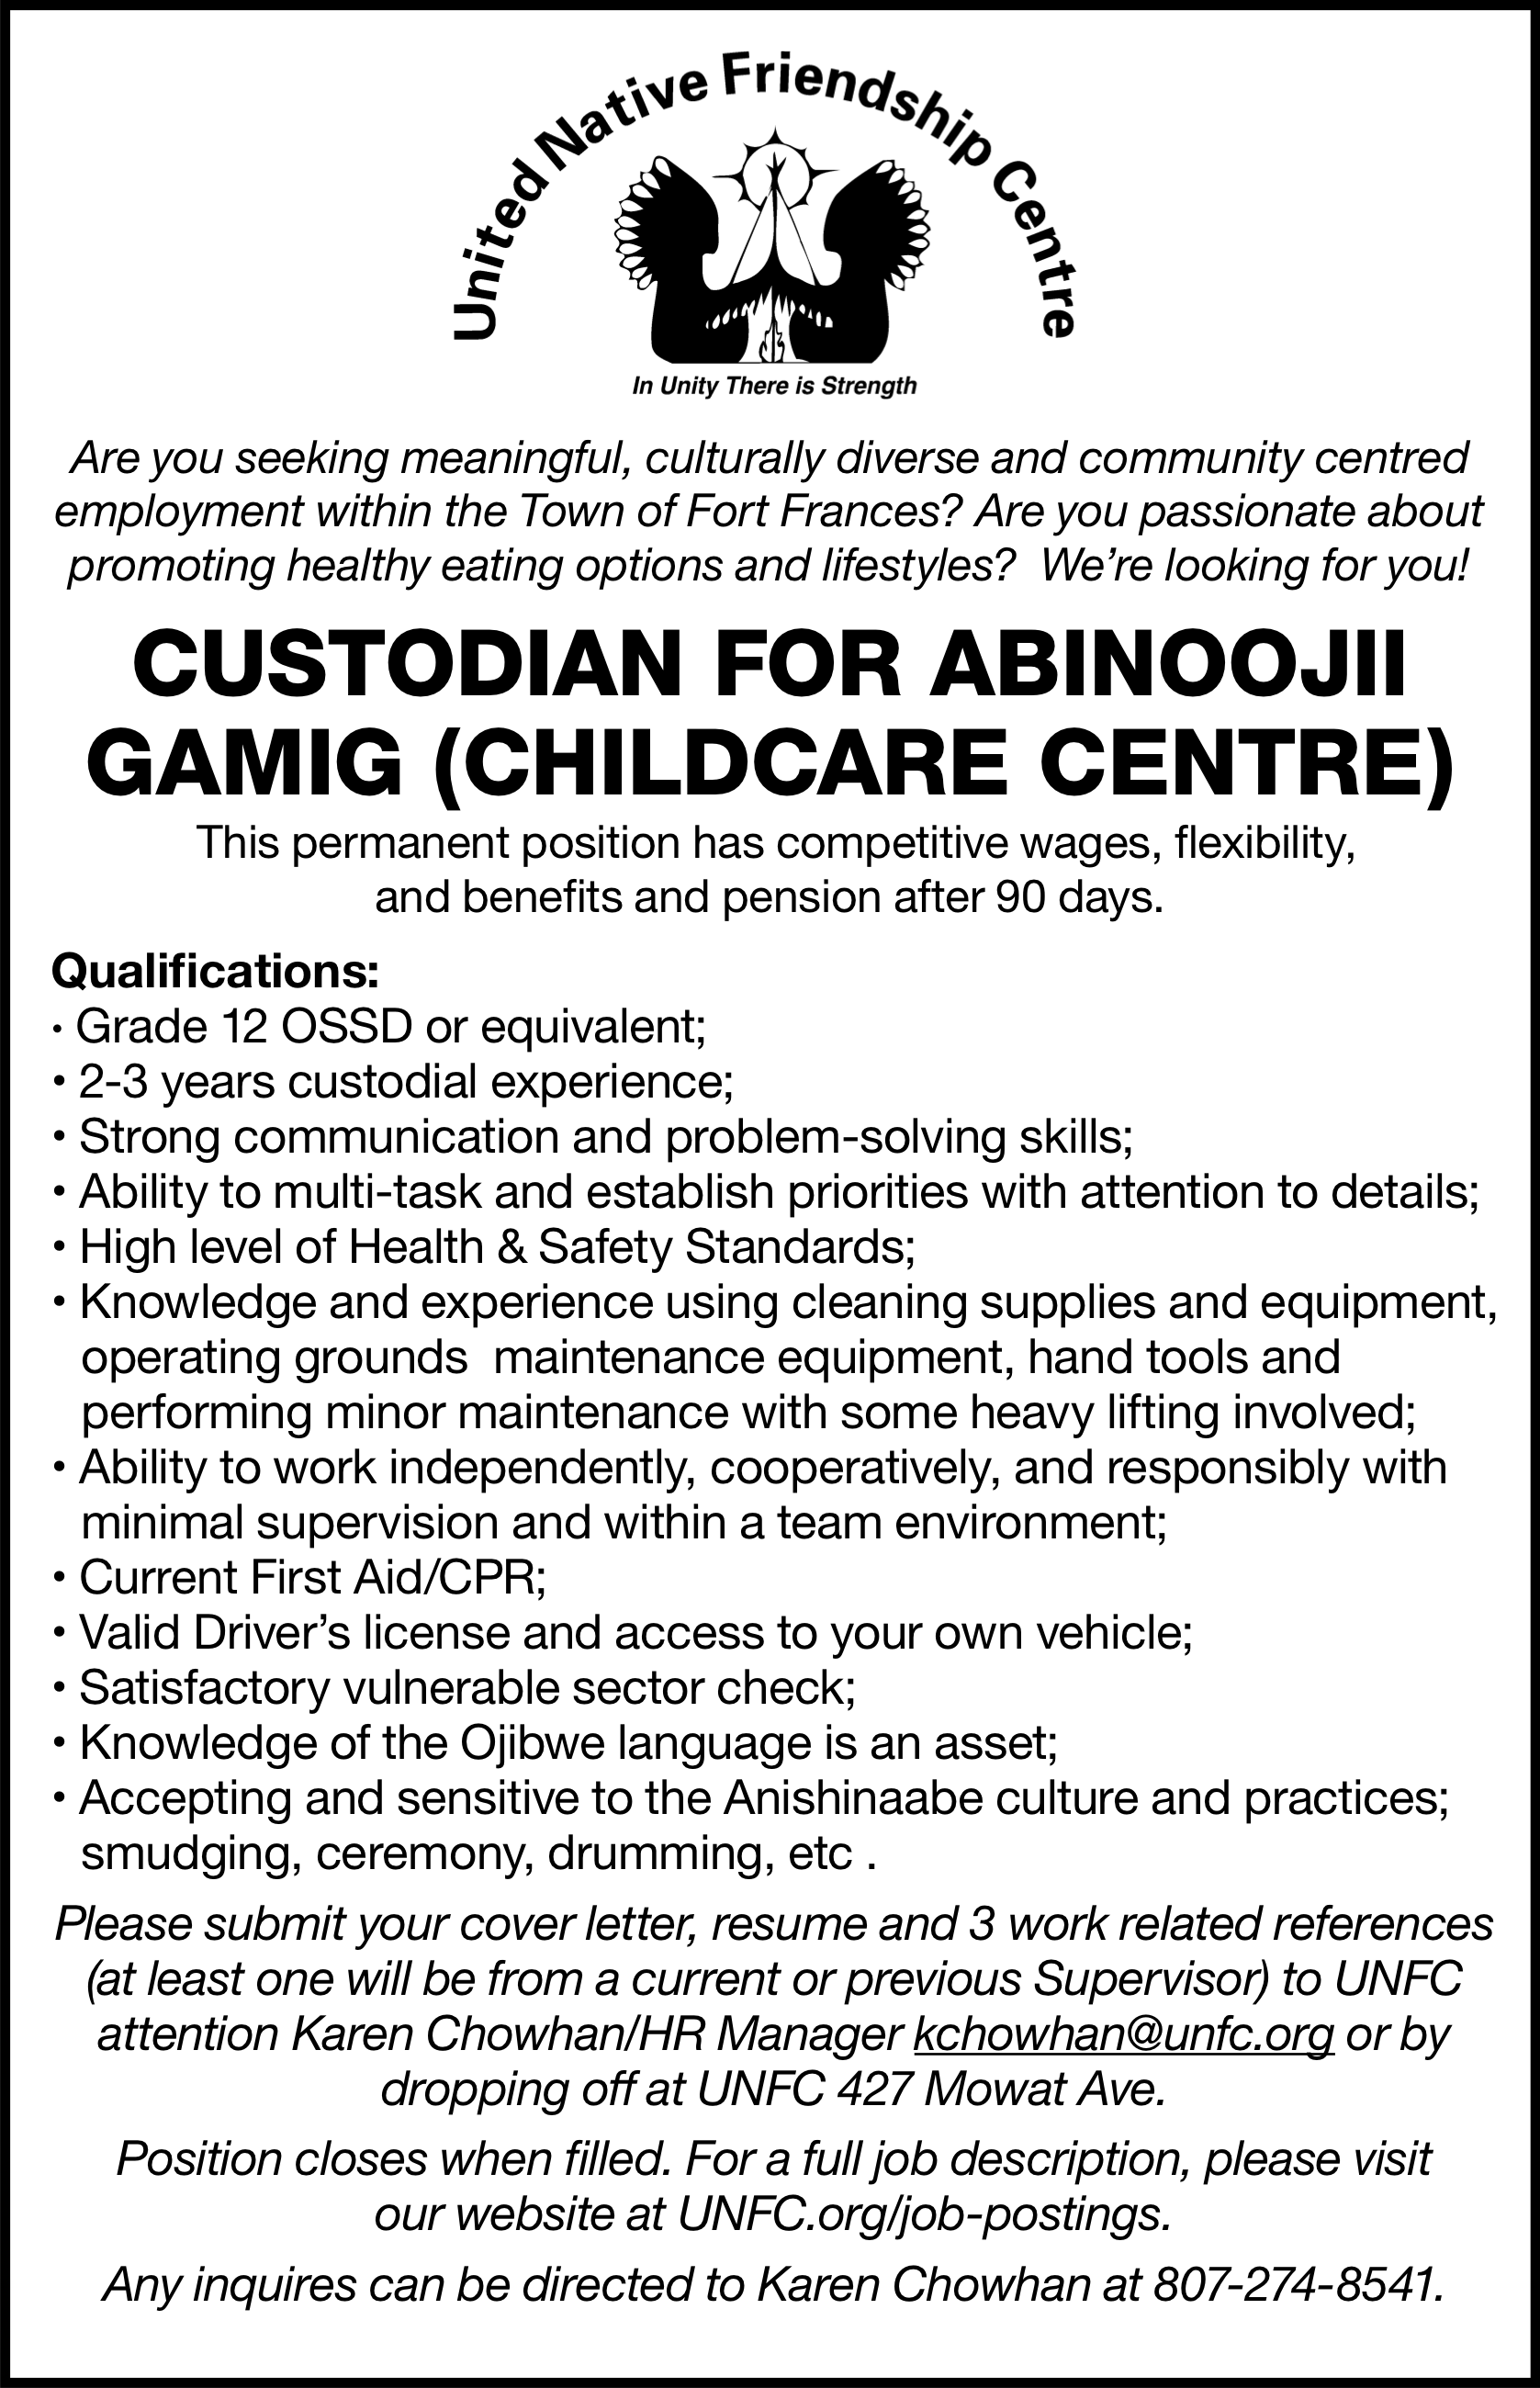 Custodian for Abinooji Gamig (Childcare Centre)